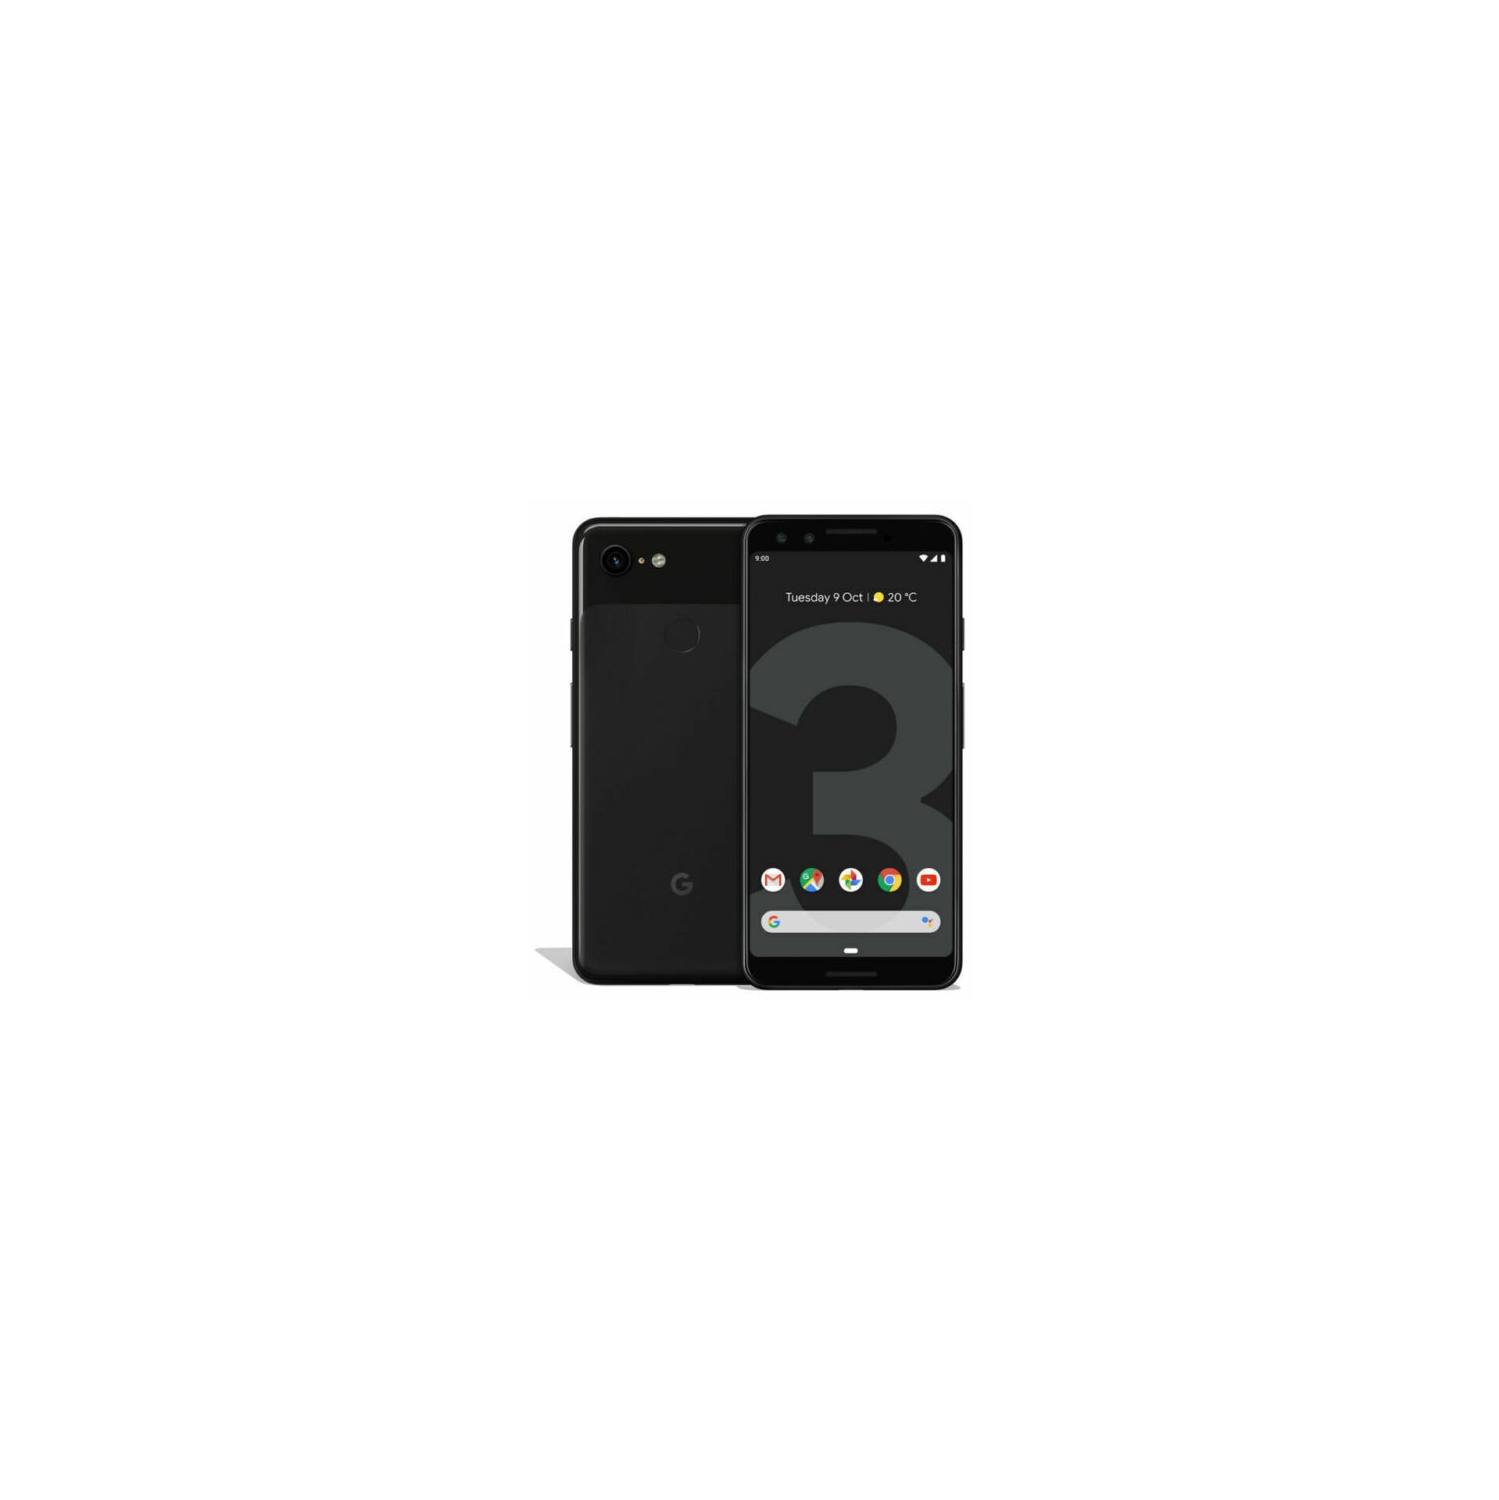 Google Pixel 3 64GB Smartphone - Just Black - Unlocked - Open Box